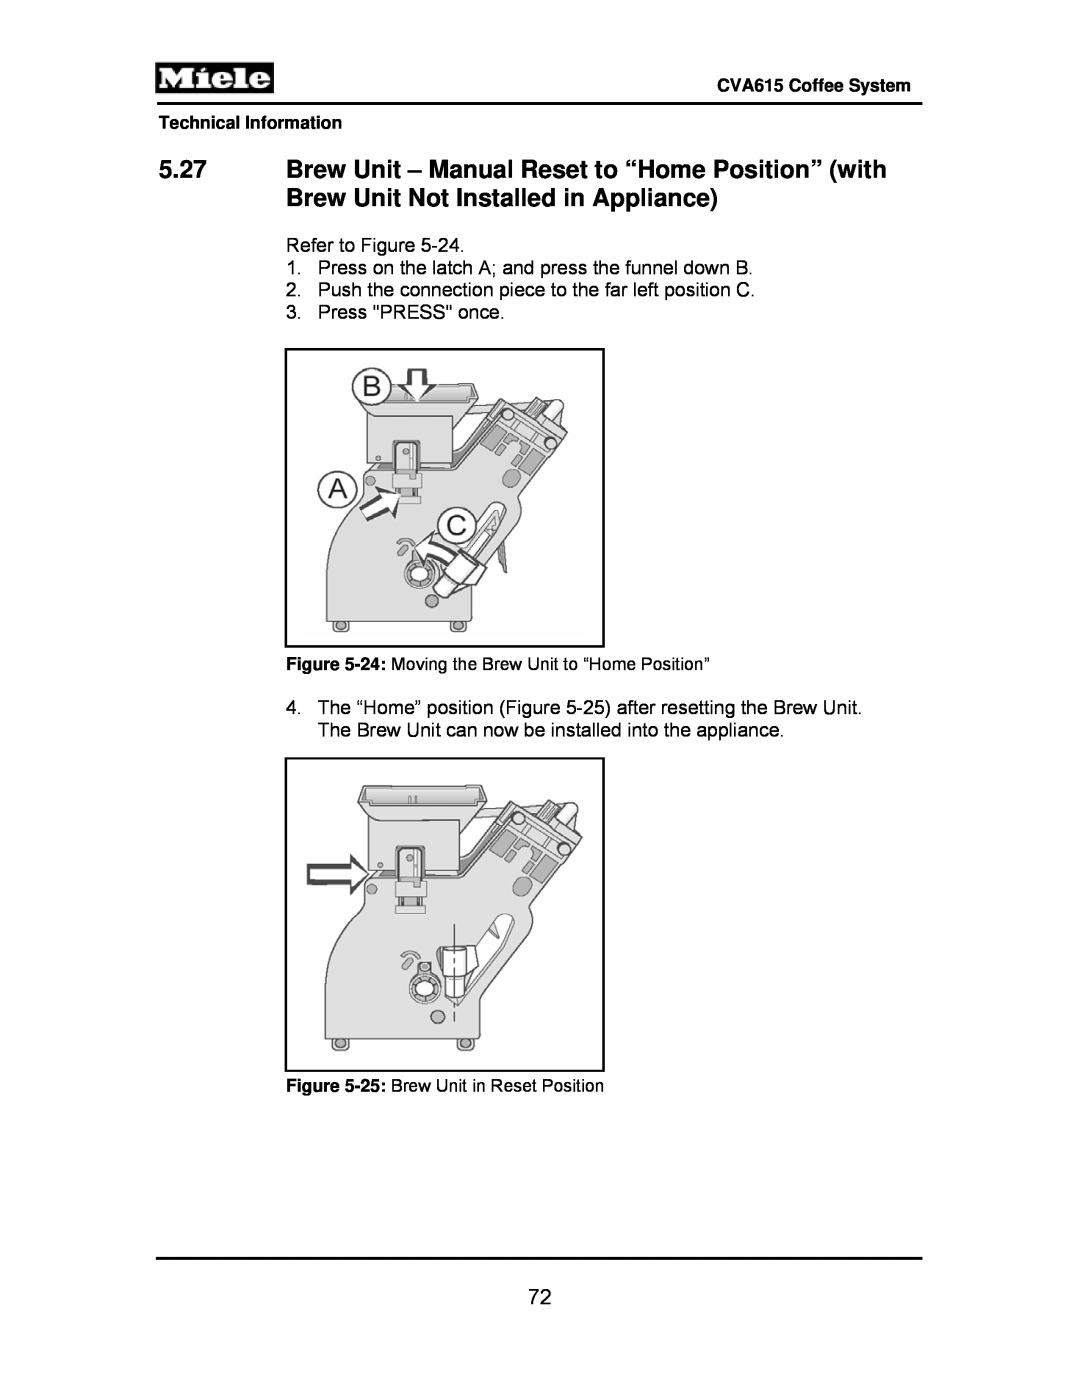 Miele CVA615 manual Refer to Figure 